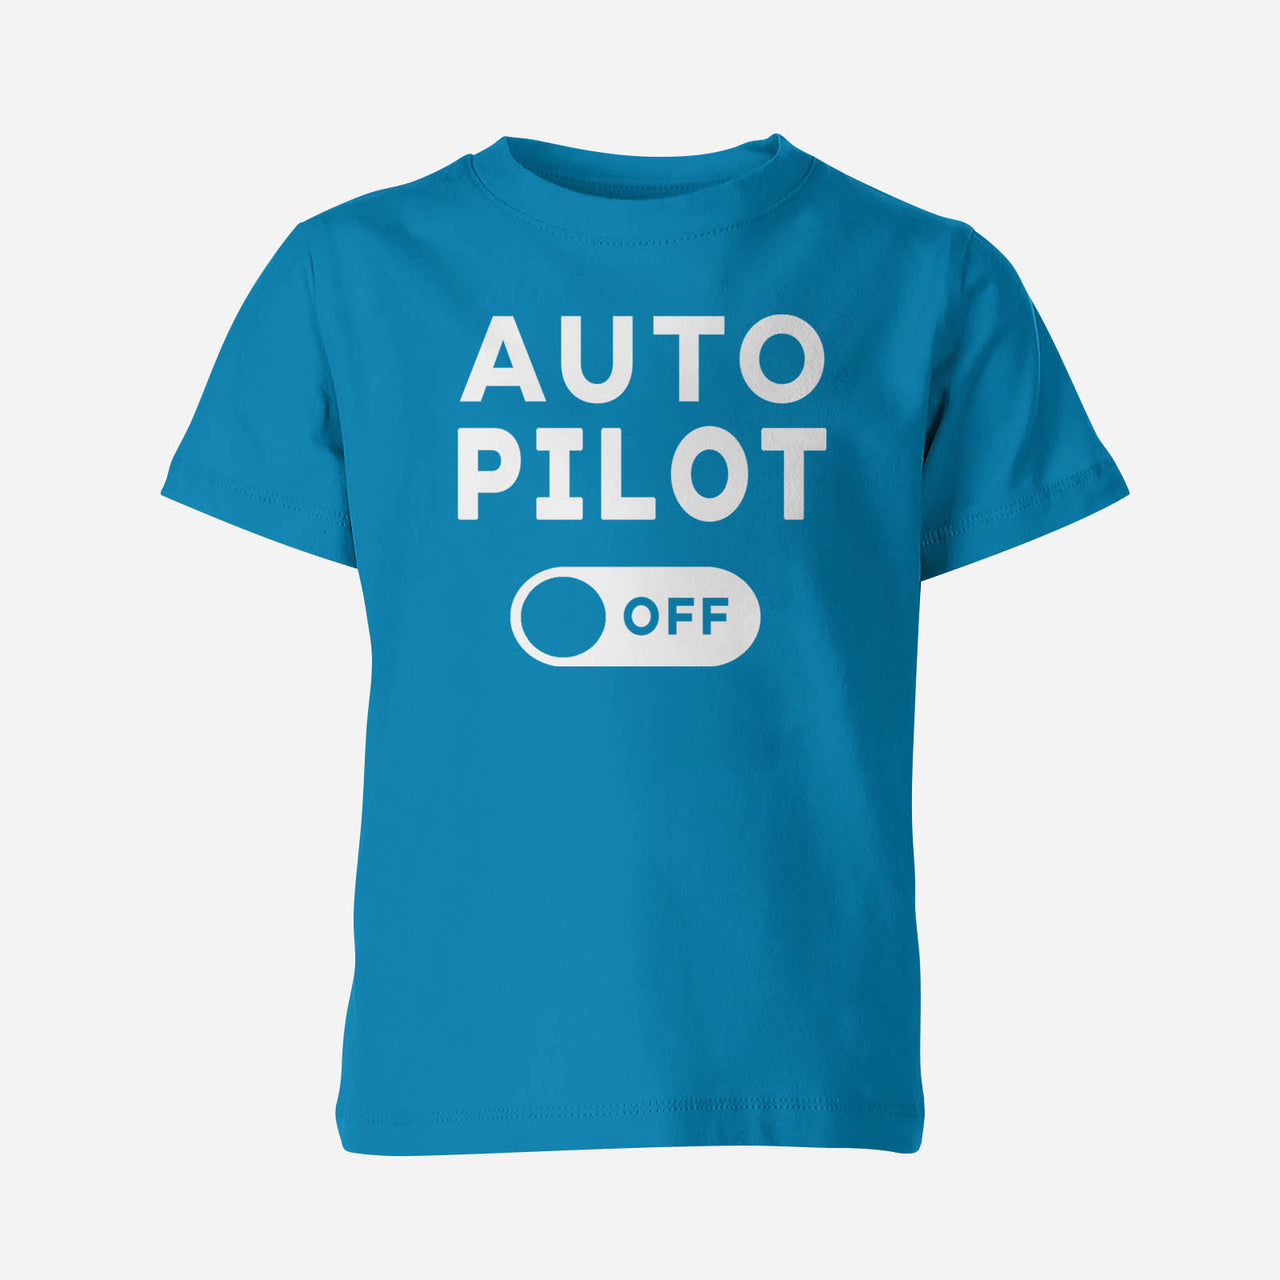 Auto Pilot Off Designed Children T-Shirts